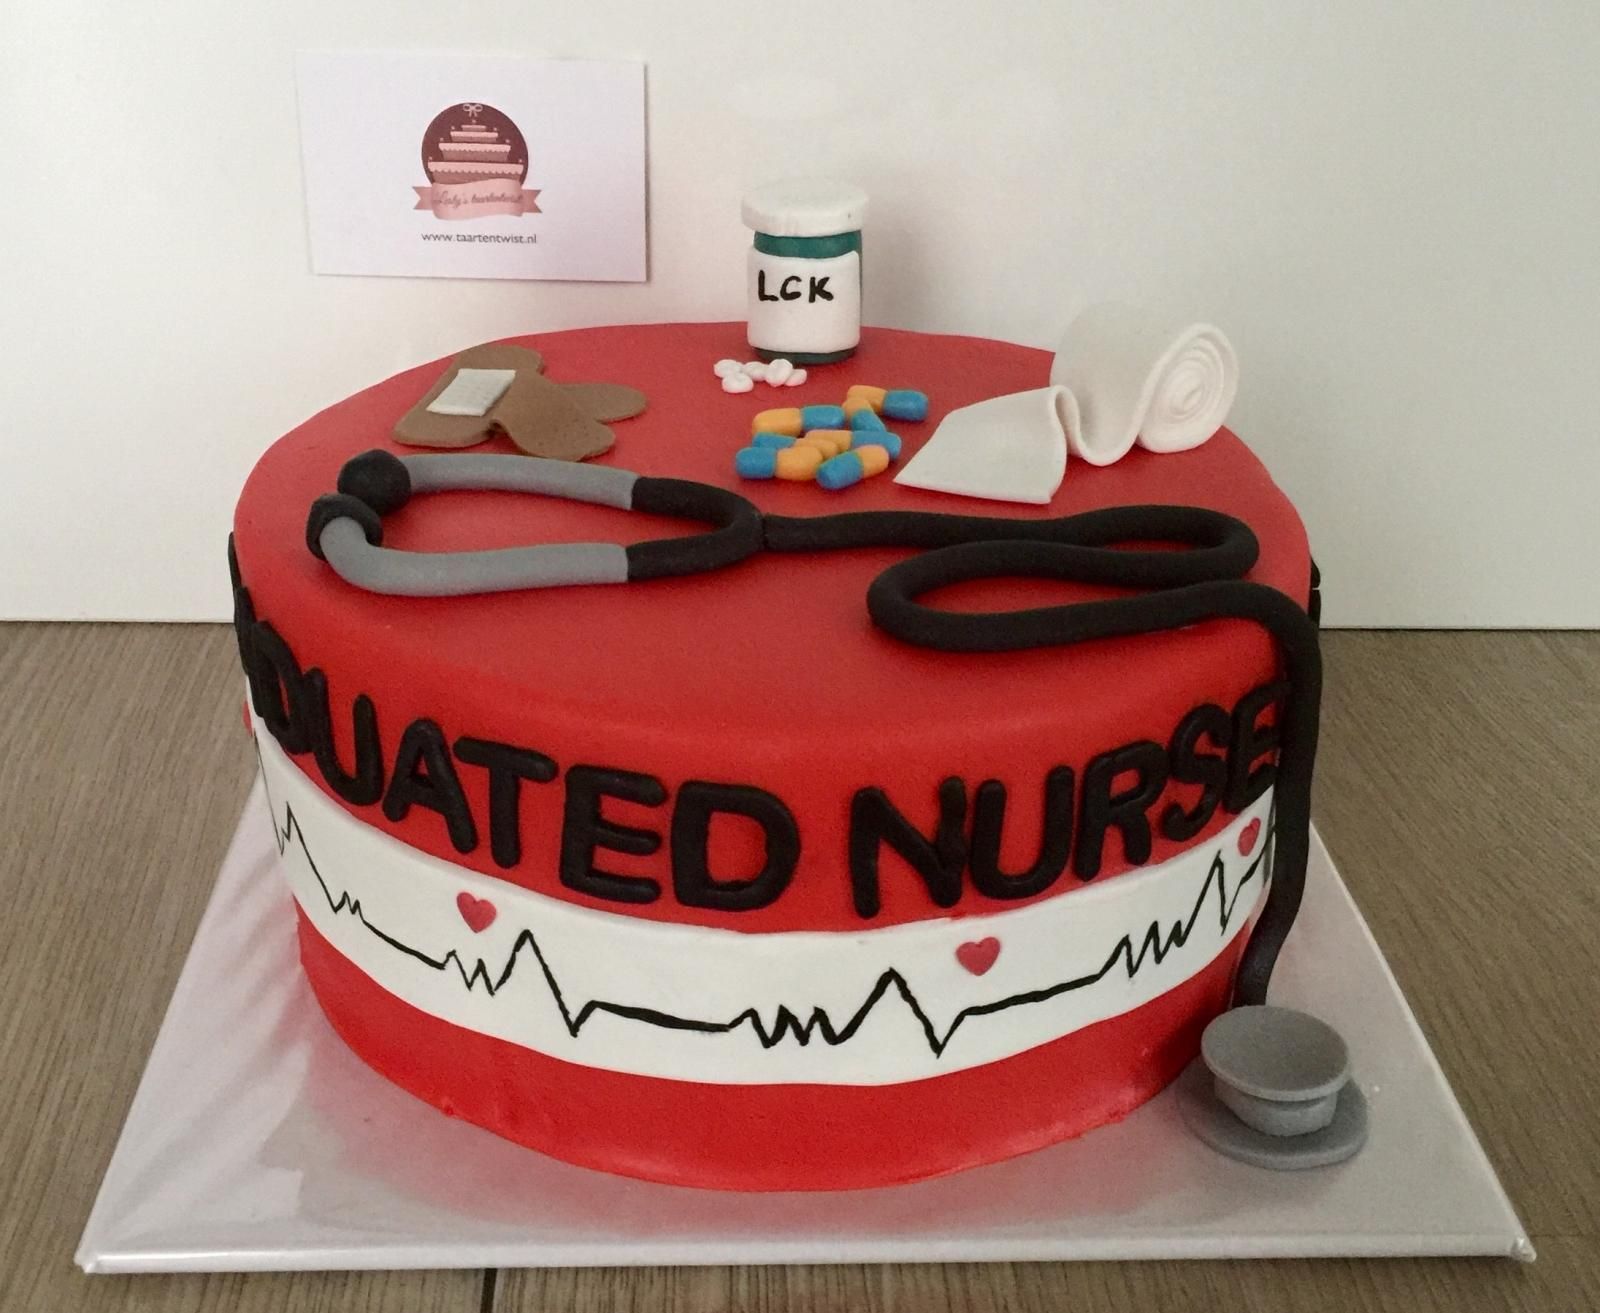 docter nurse cake